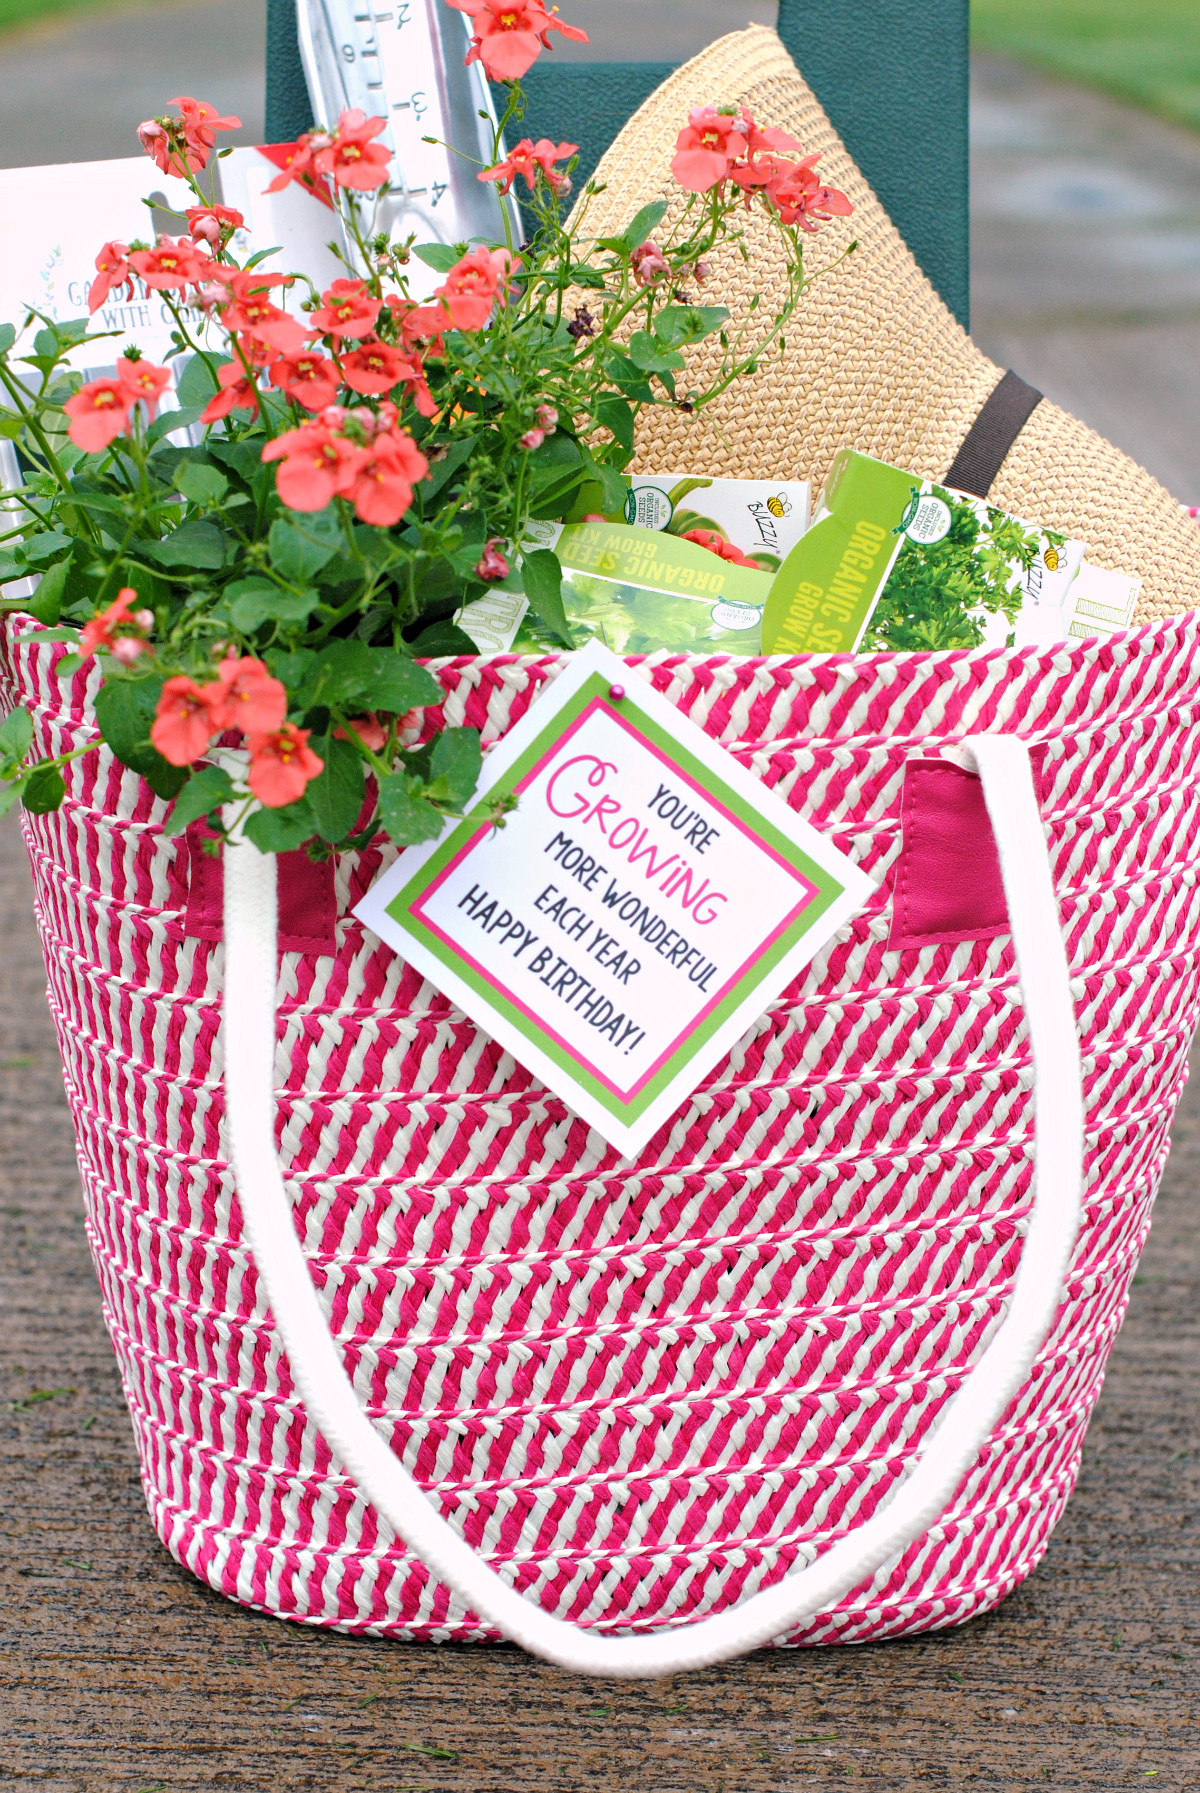 Fun Gift Basket Ideas
 Fun Gardening Gift Basket Idea – Fun Squared